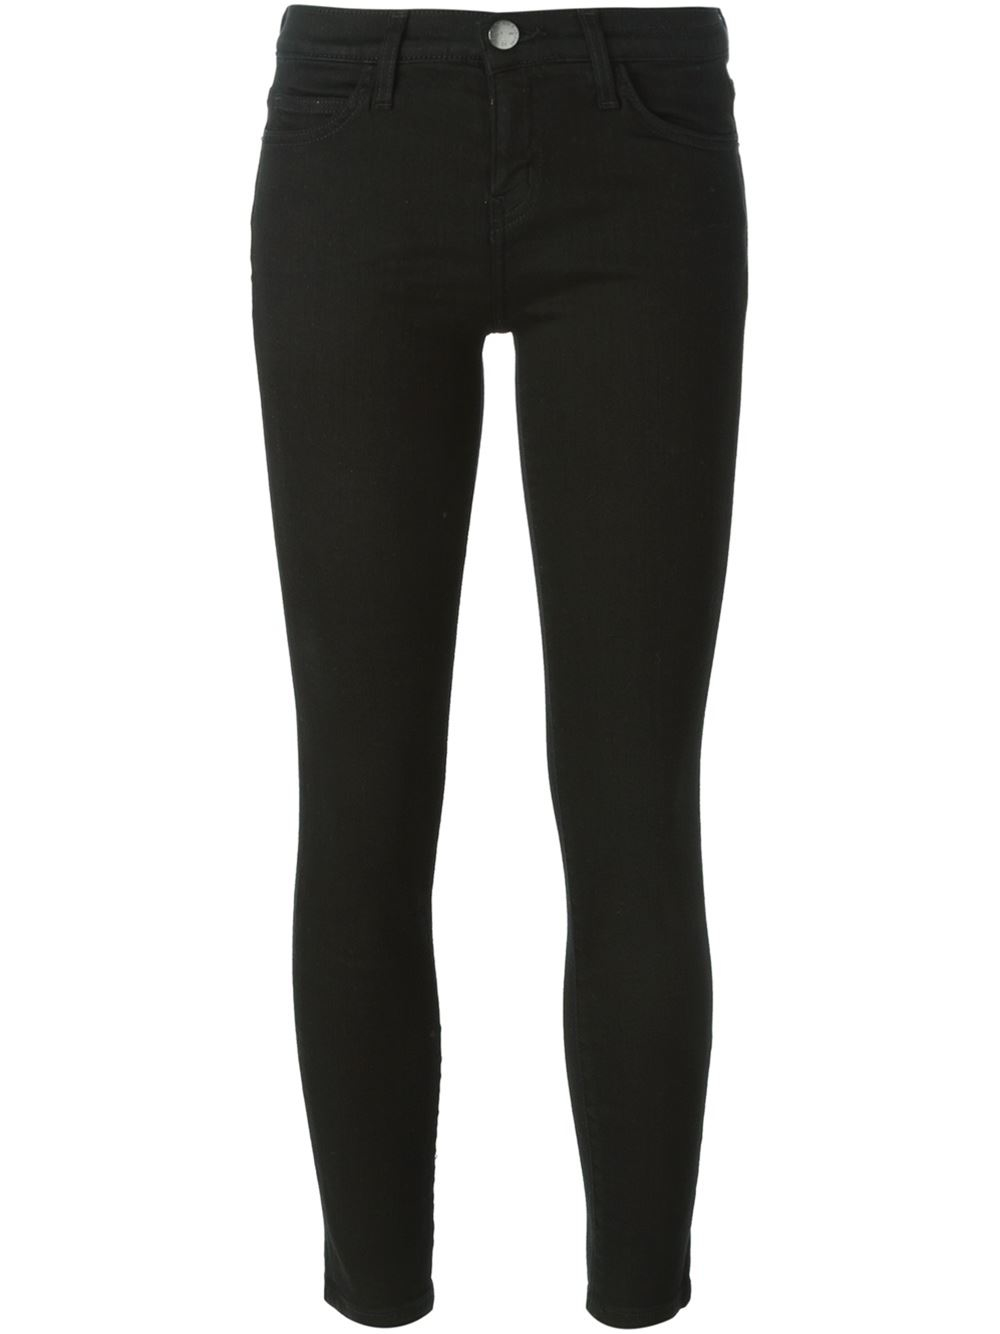 Current/elliott Stiletto Skinny Jeans in Black | Lyst